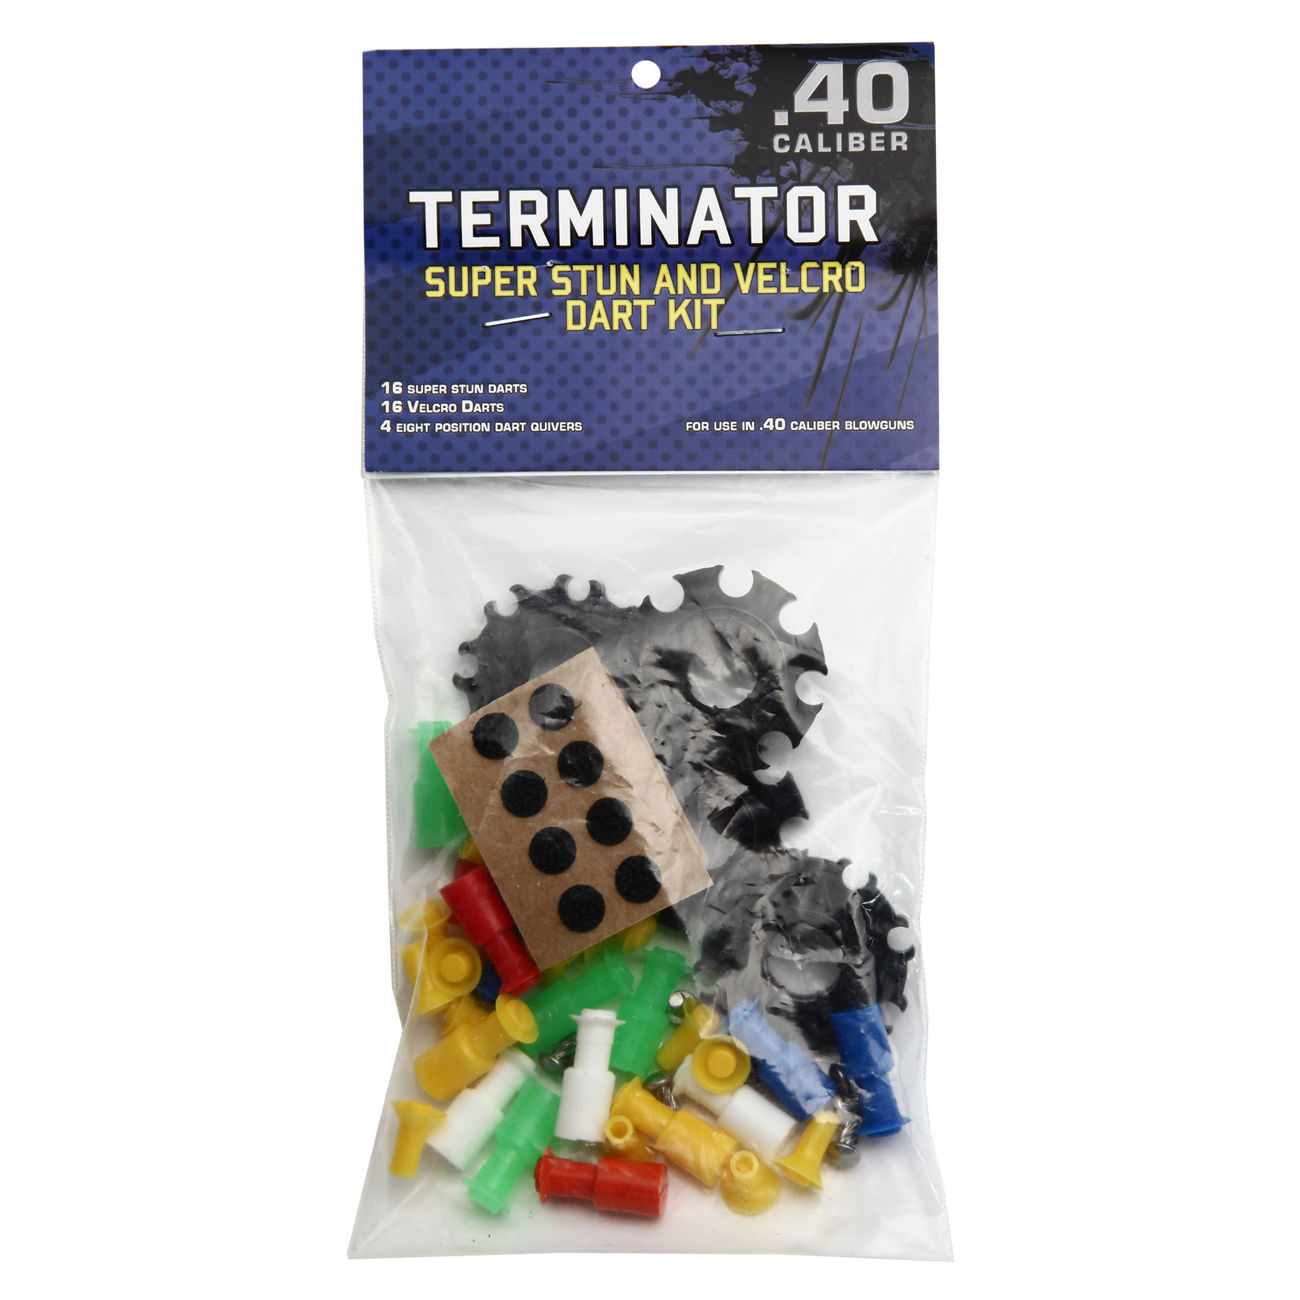 Terminator Blasrohrpfeilset Super Stun and Velcro Dart Kit inkl. Kcher Bild 1